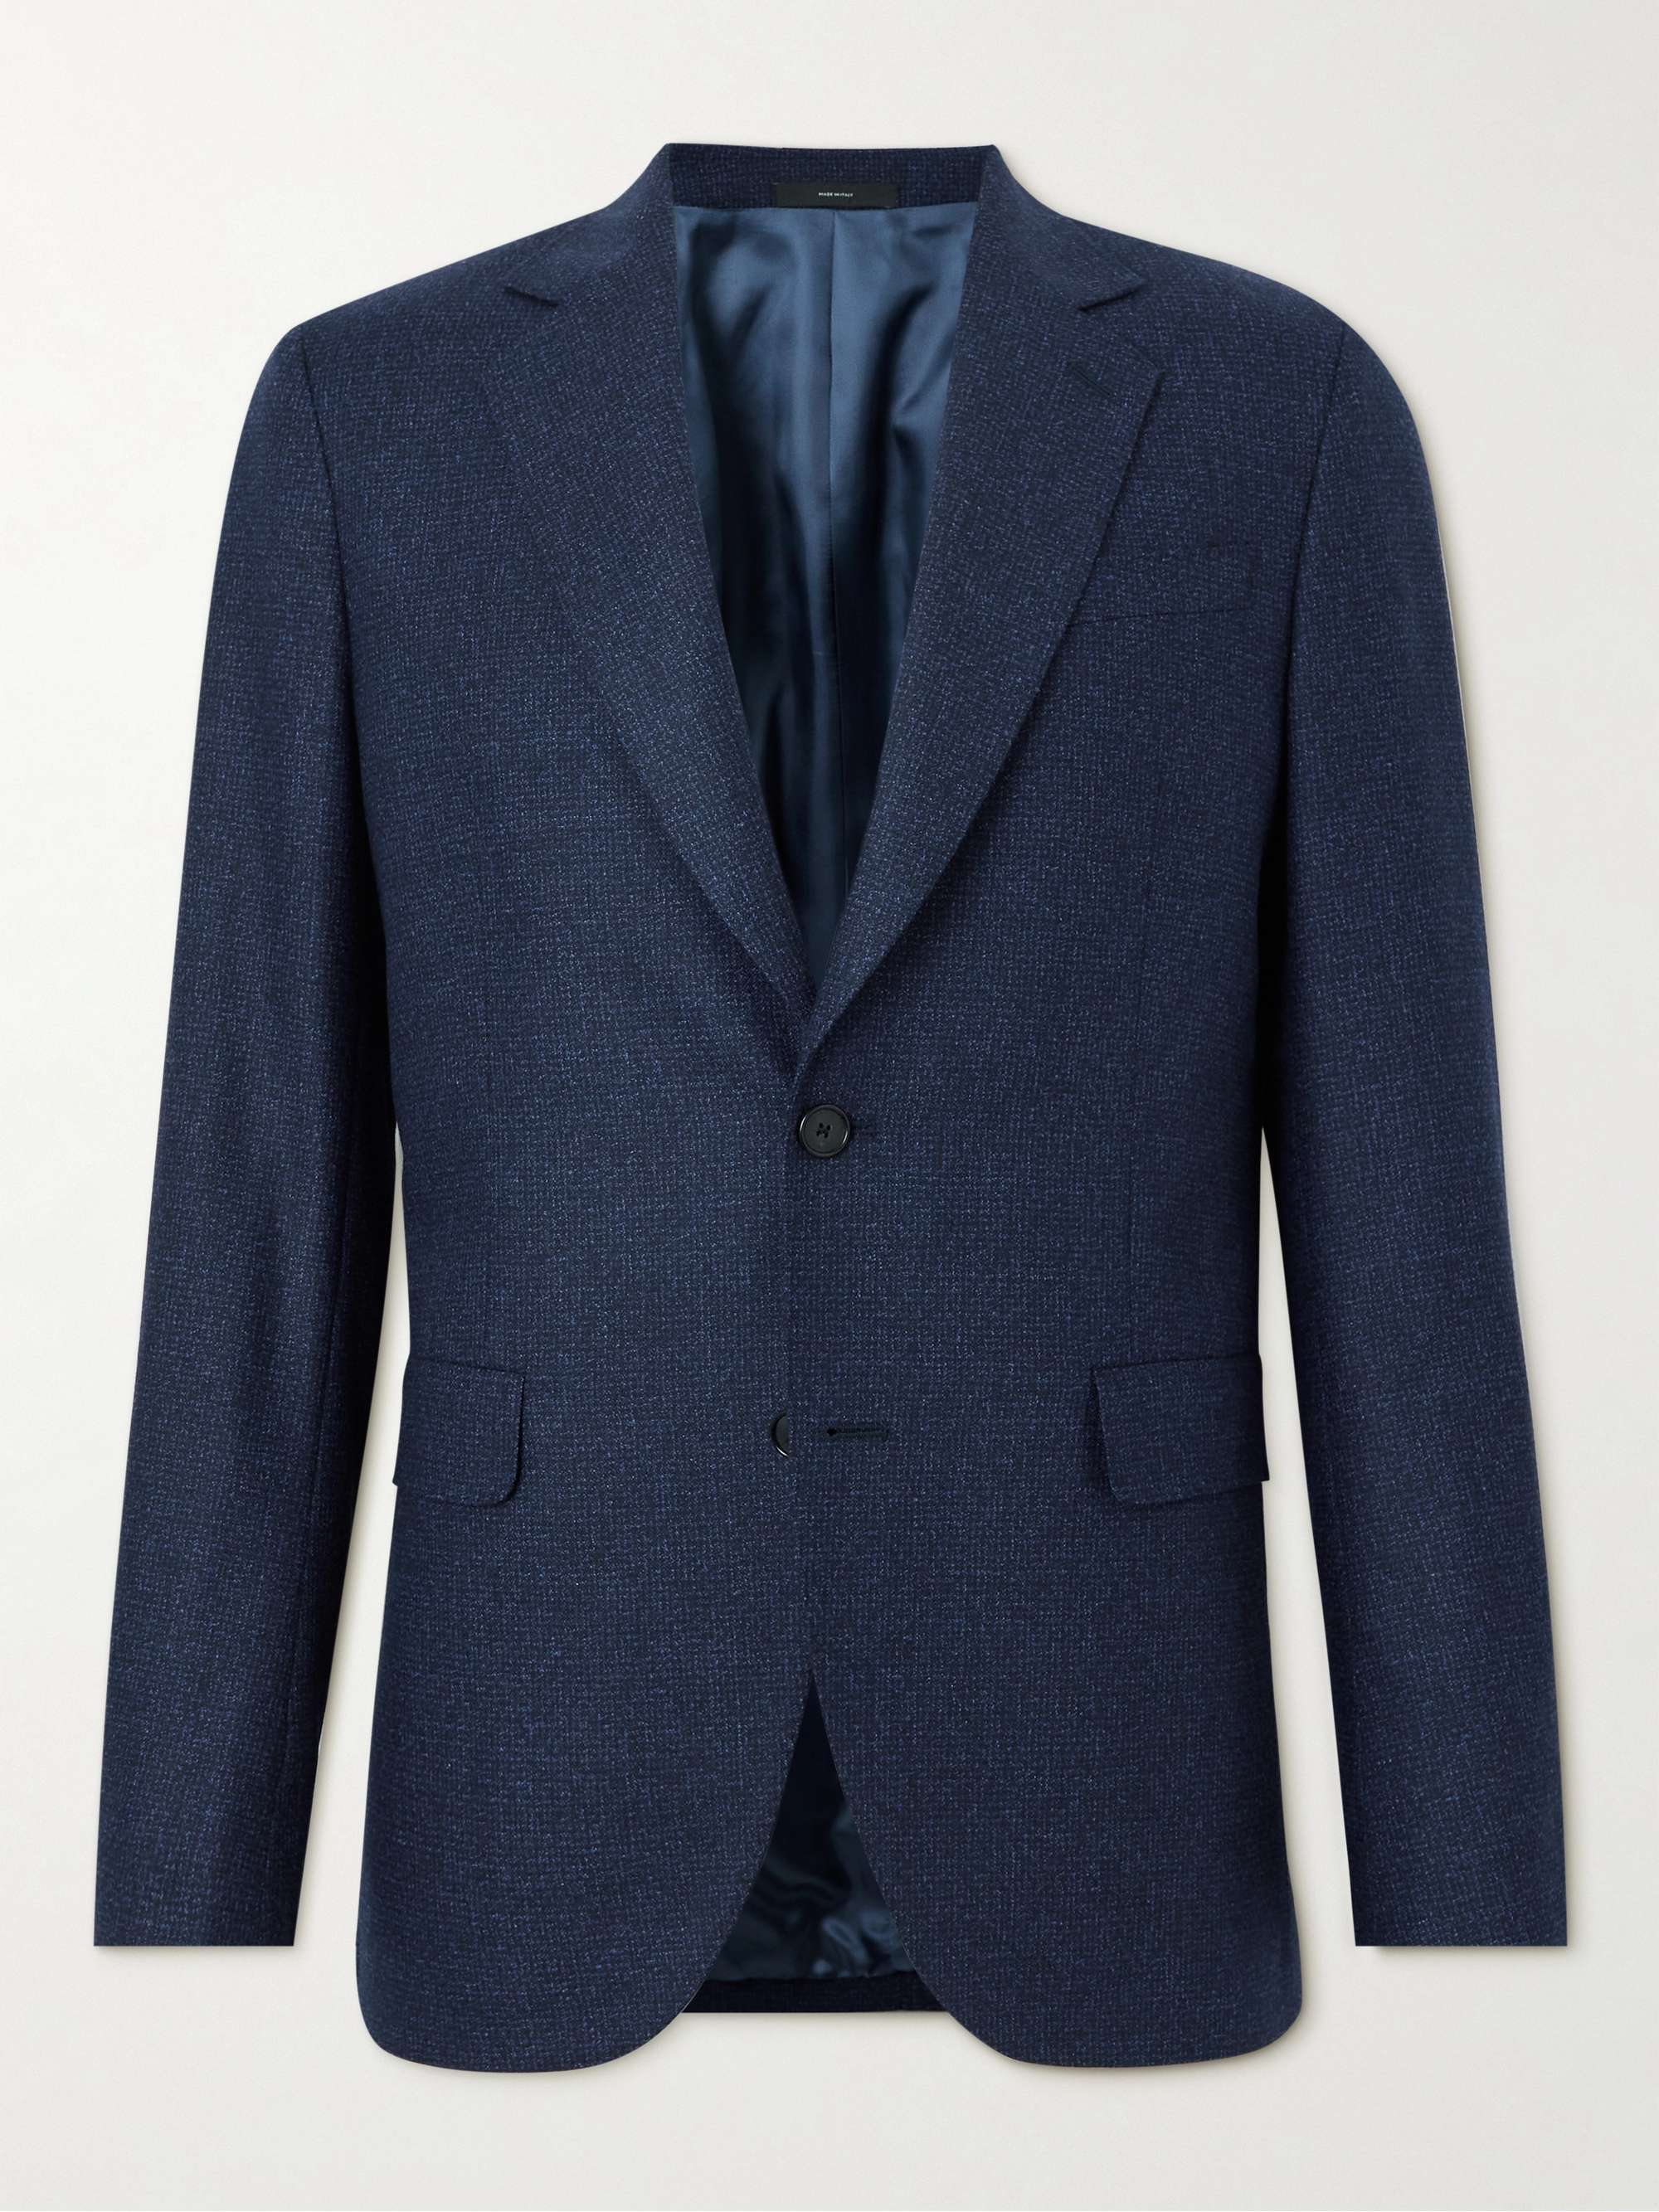 PAUL SMITH Wool-Tweed Suit Jacket for Men | MR PORTER